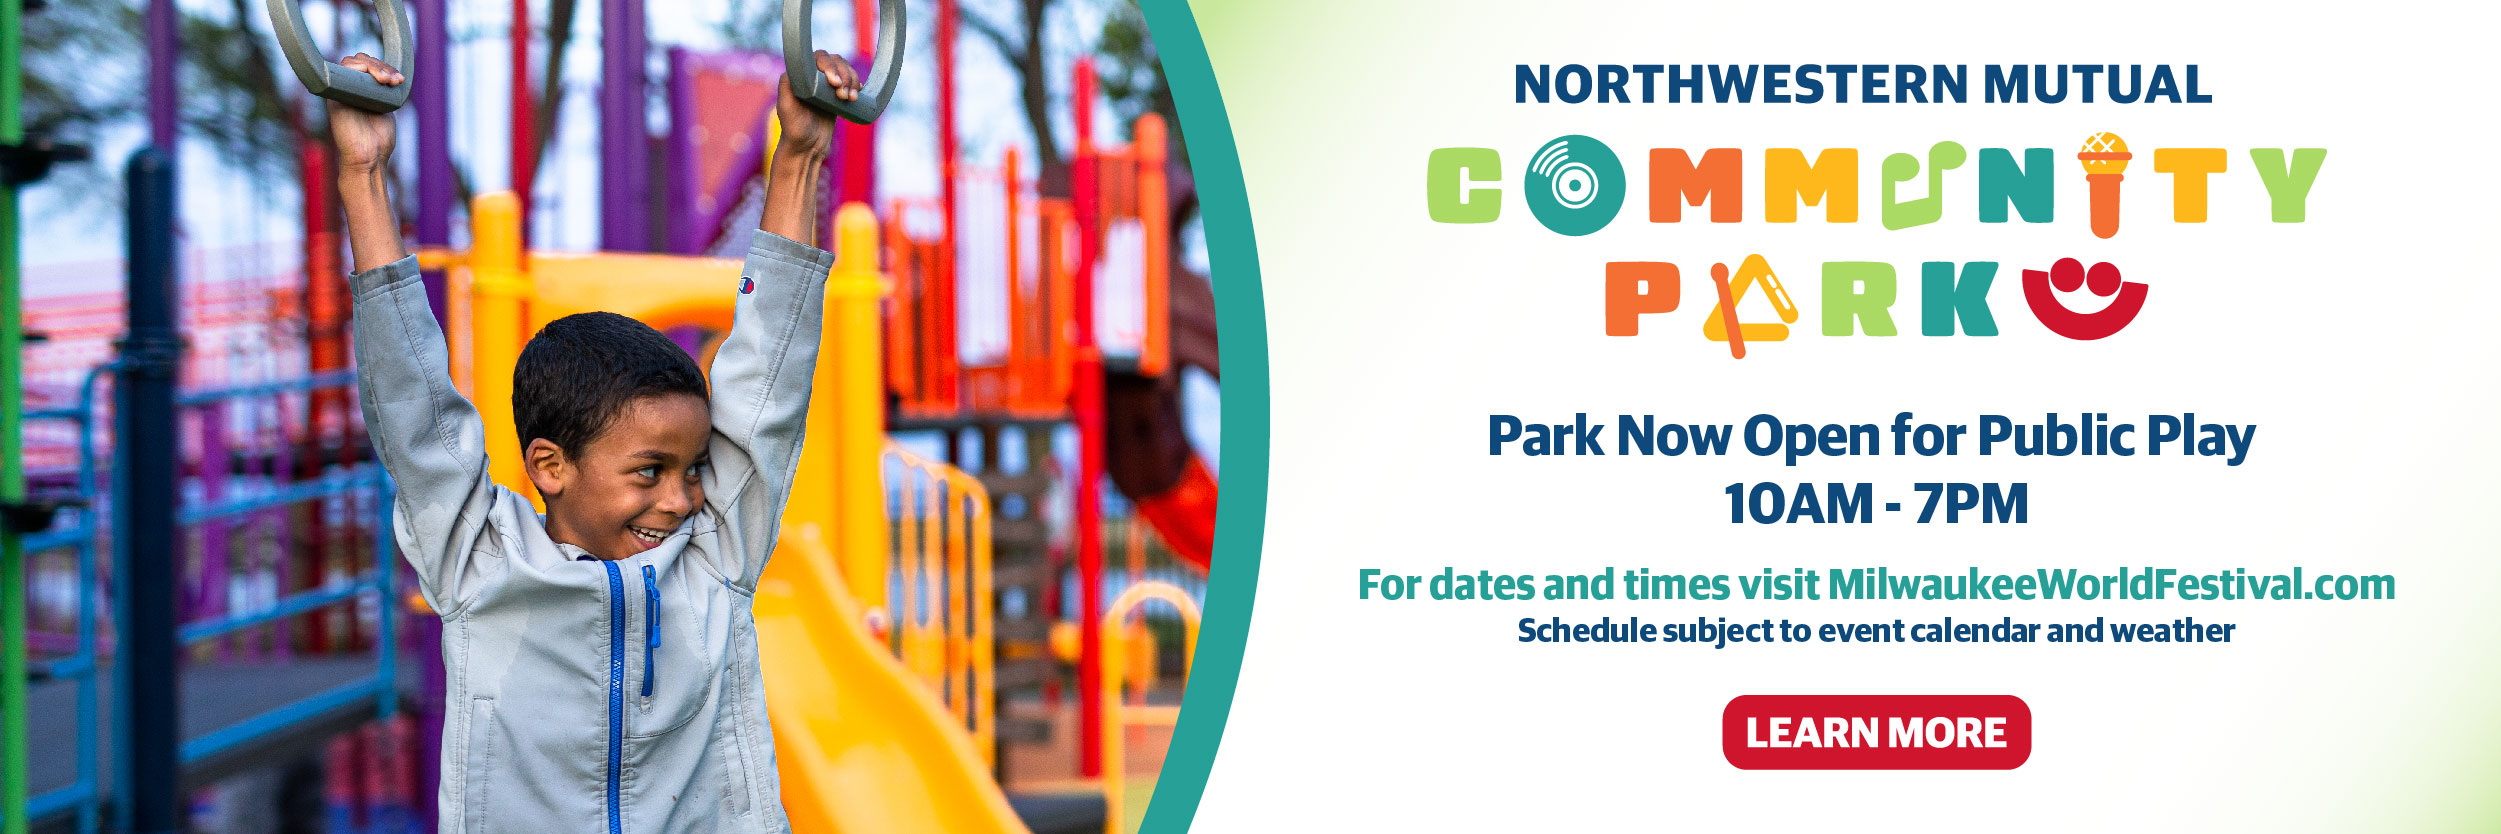 Northwestern Mutual Community Park